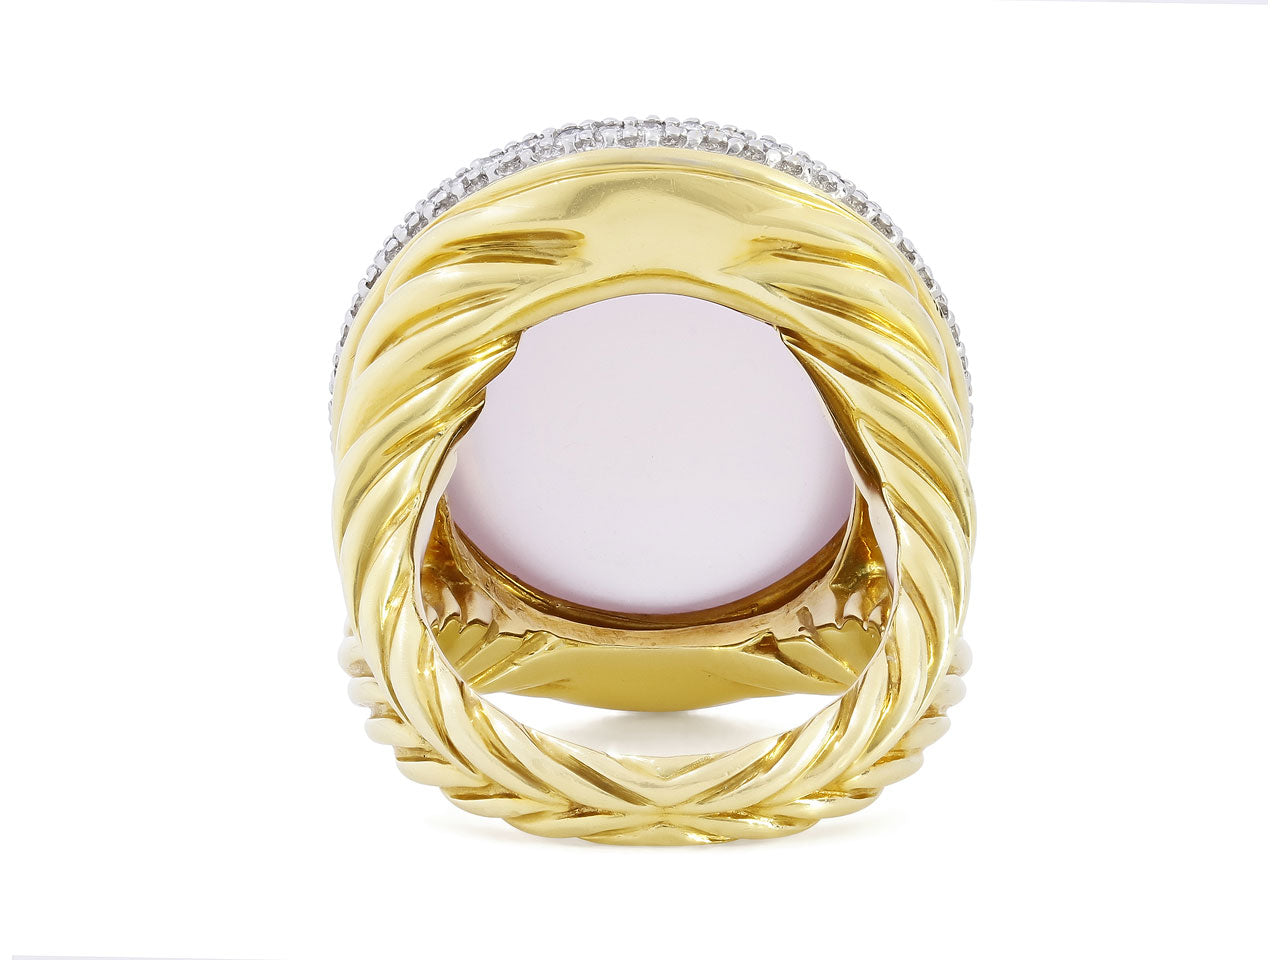 David Yurman Rose Quartz Cocktail Ring in 18K Gold